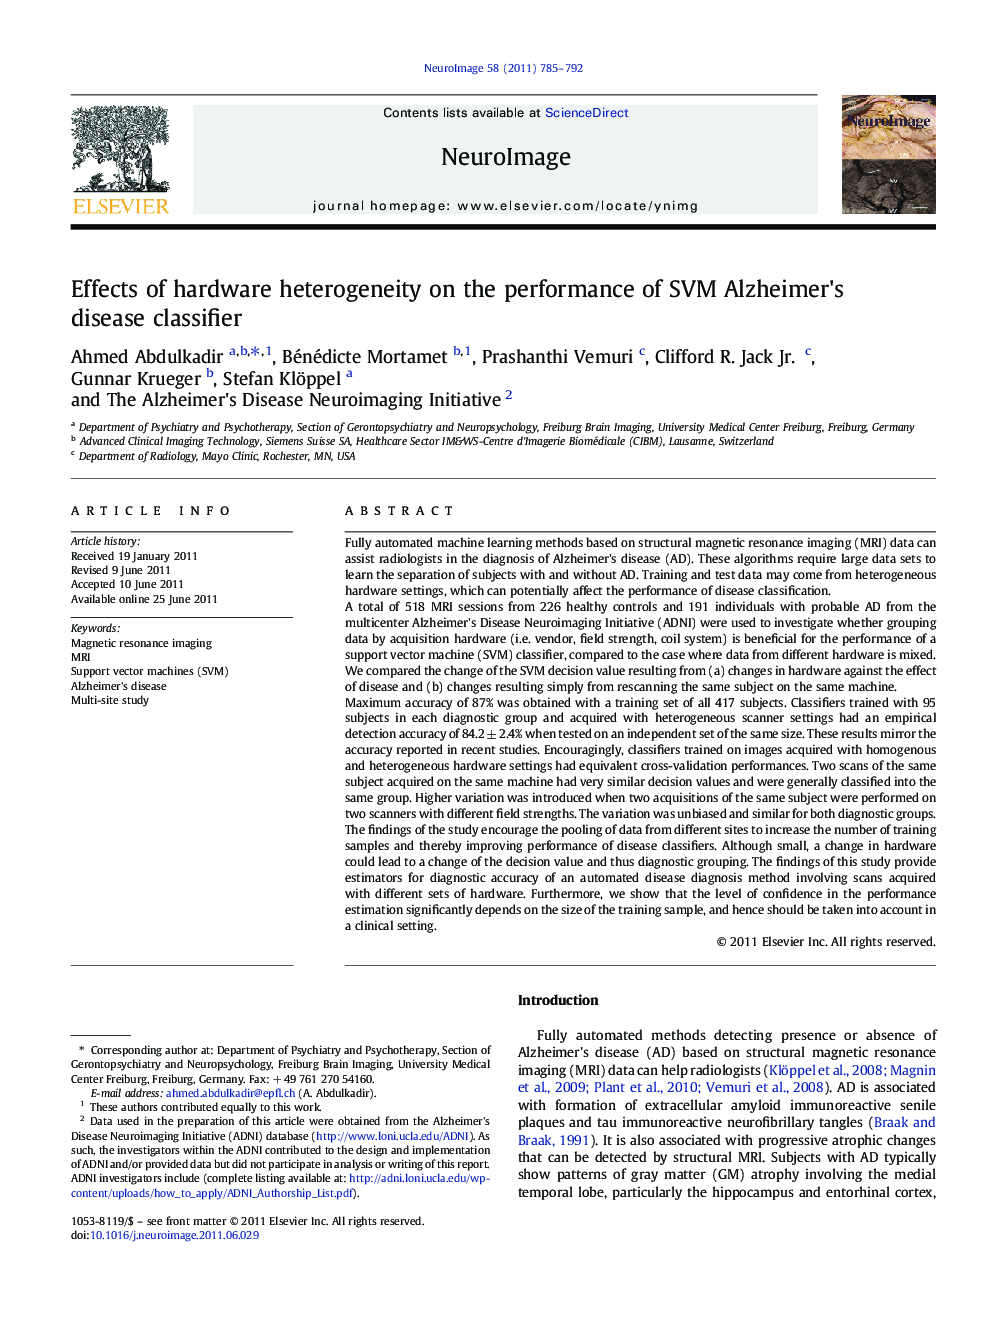 Effects of hardware heterogeneity on the performance of SVM Alzheimer's disease classifier